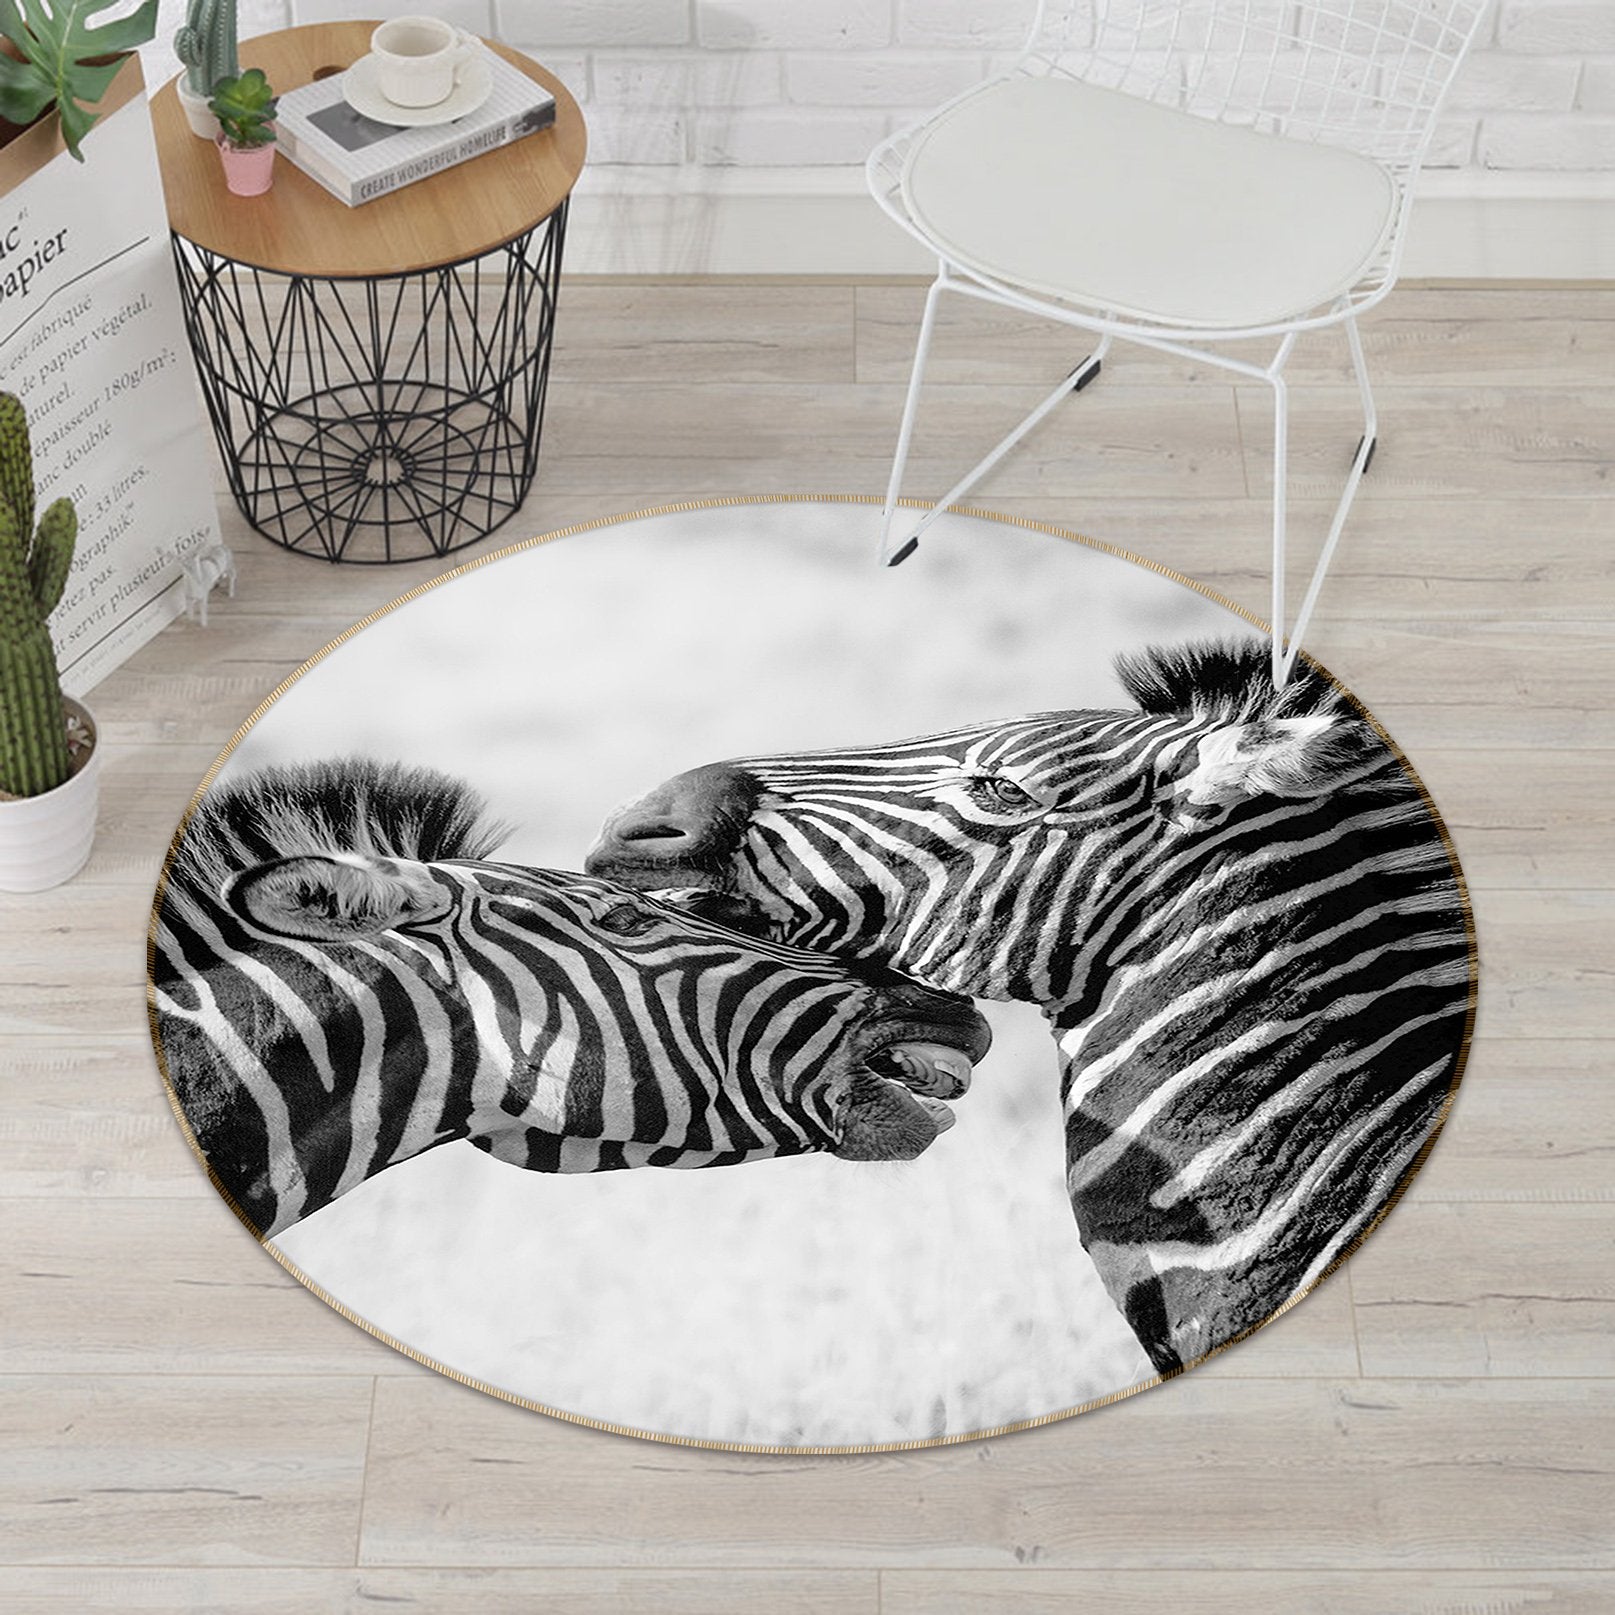 3D Zebra 113 Animal Round Non Slip Rug Mat Mat AJ Creativity Home 